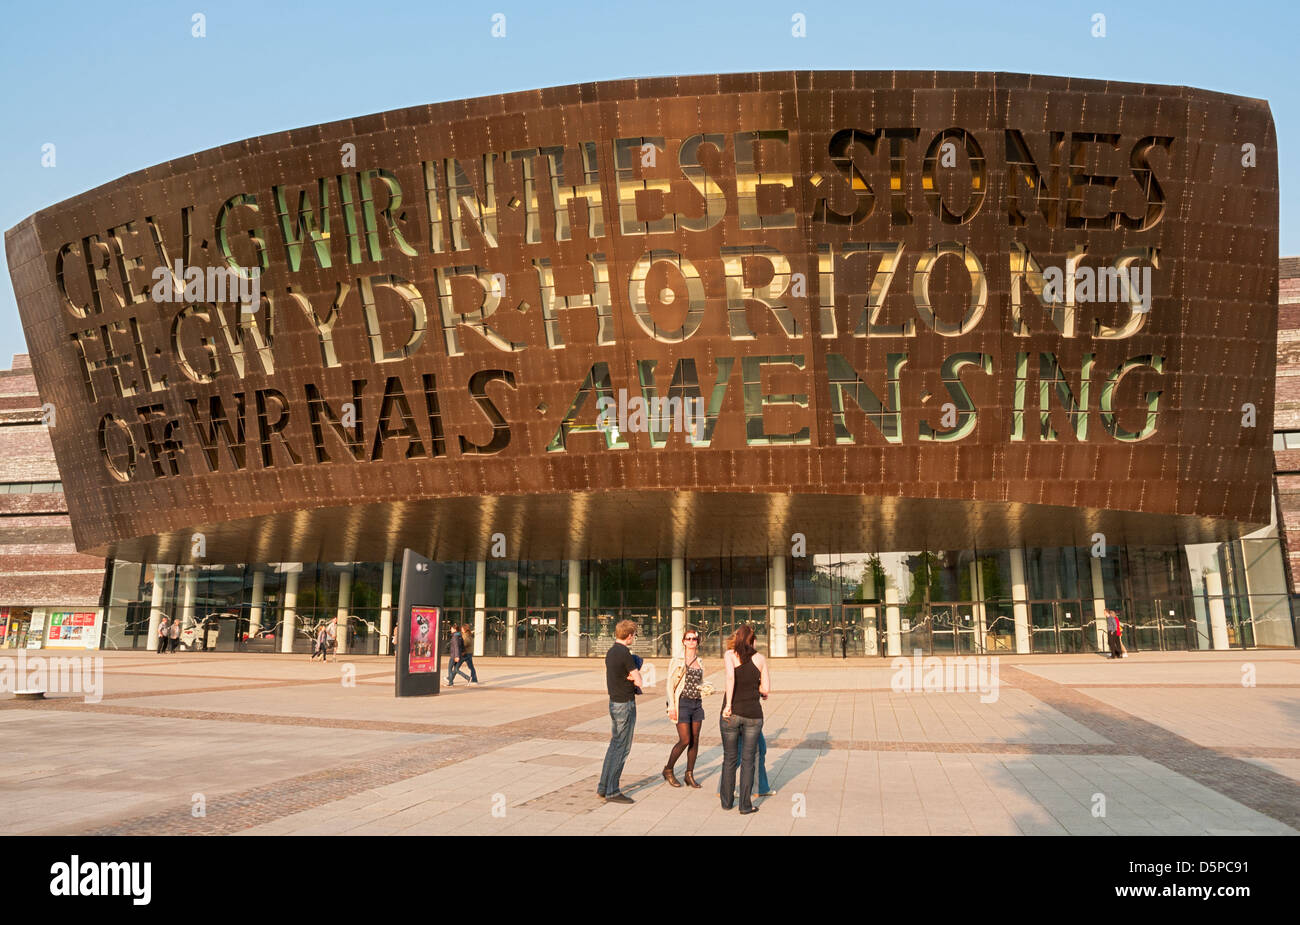 Wales, Cardiff Bay, Roald Dahls Plass, Wales Millennium Centre, performing arts venue Stock Photo